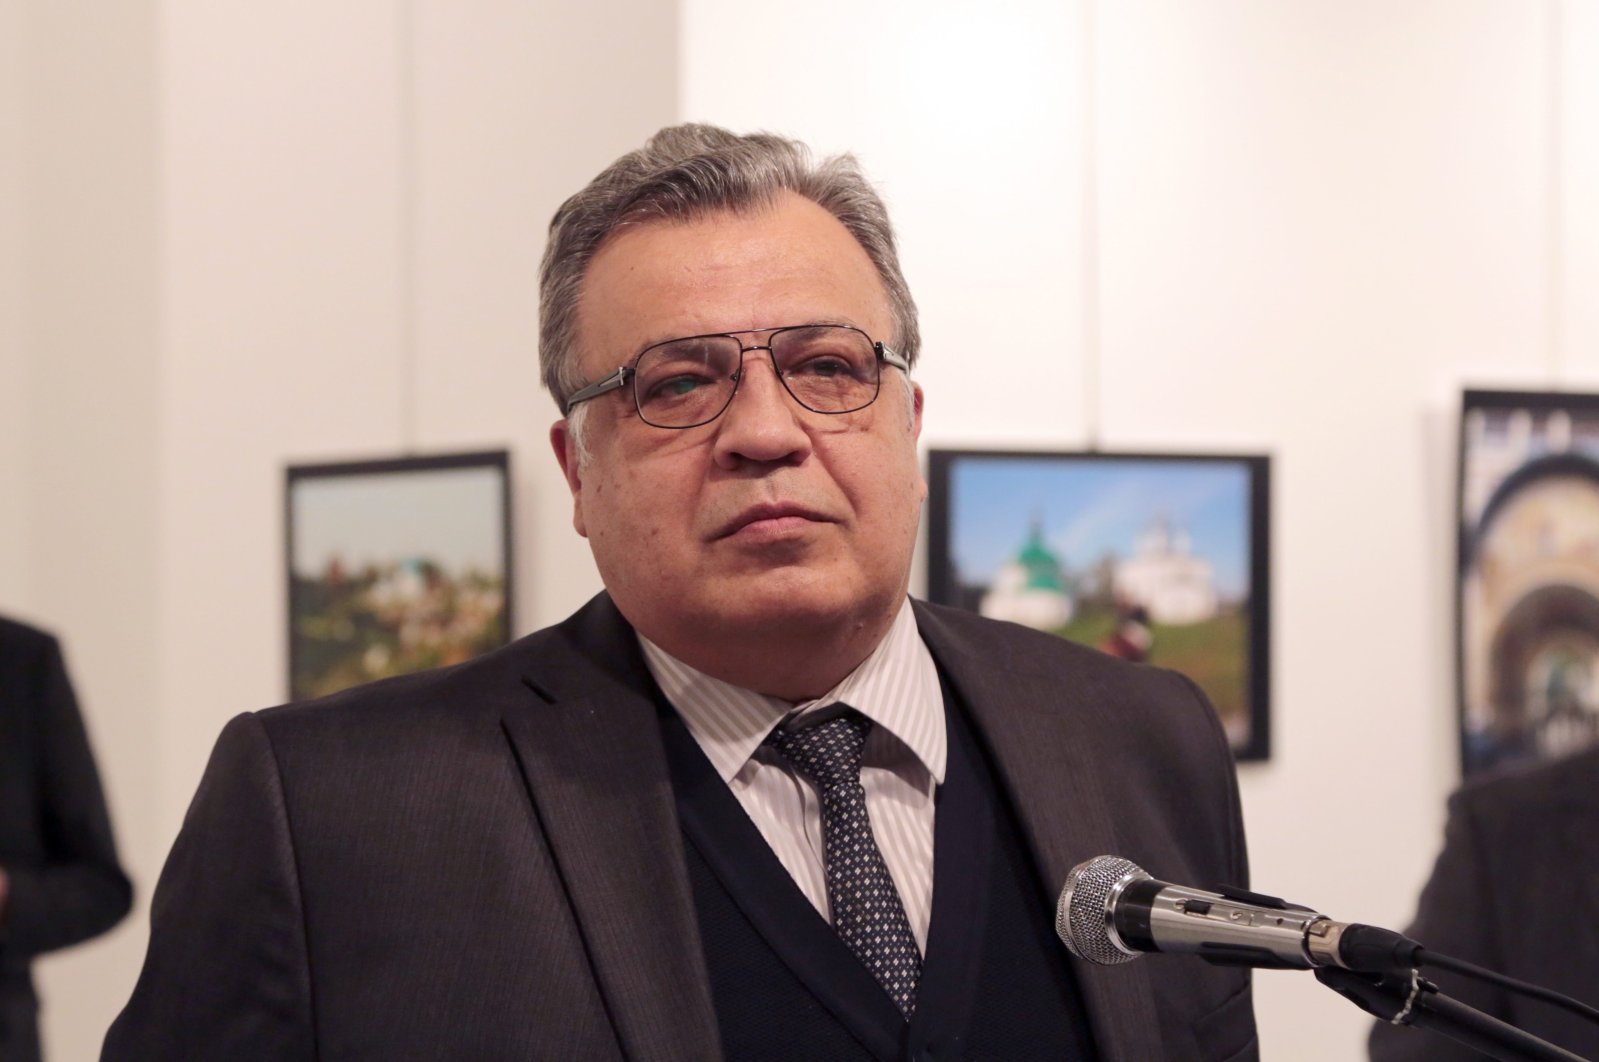 The Russian Ambassador to Turkey Andrei Karlov speaks at a gallery in the capital Ankara, Dec. 19, 2016. (AP Photo)